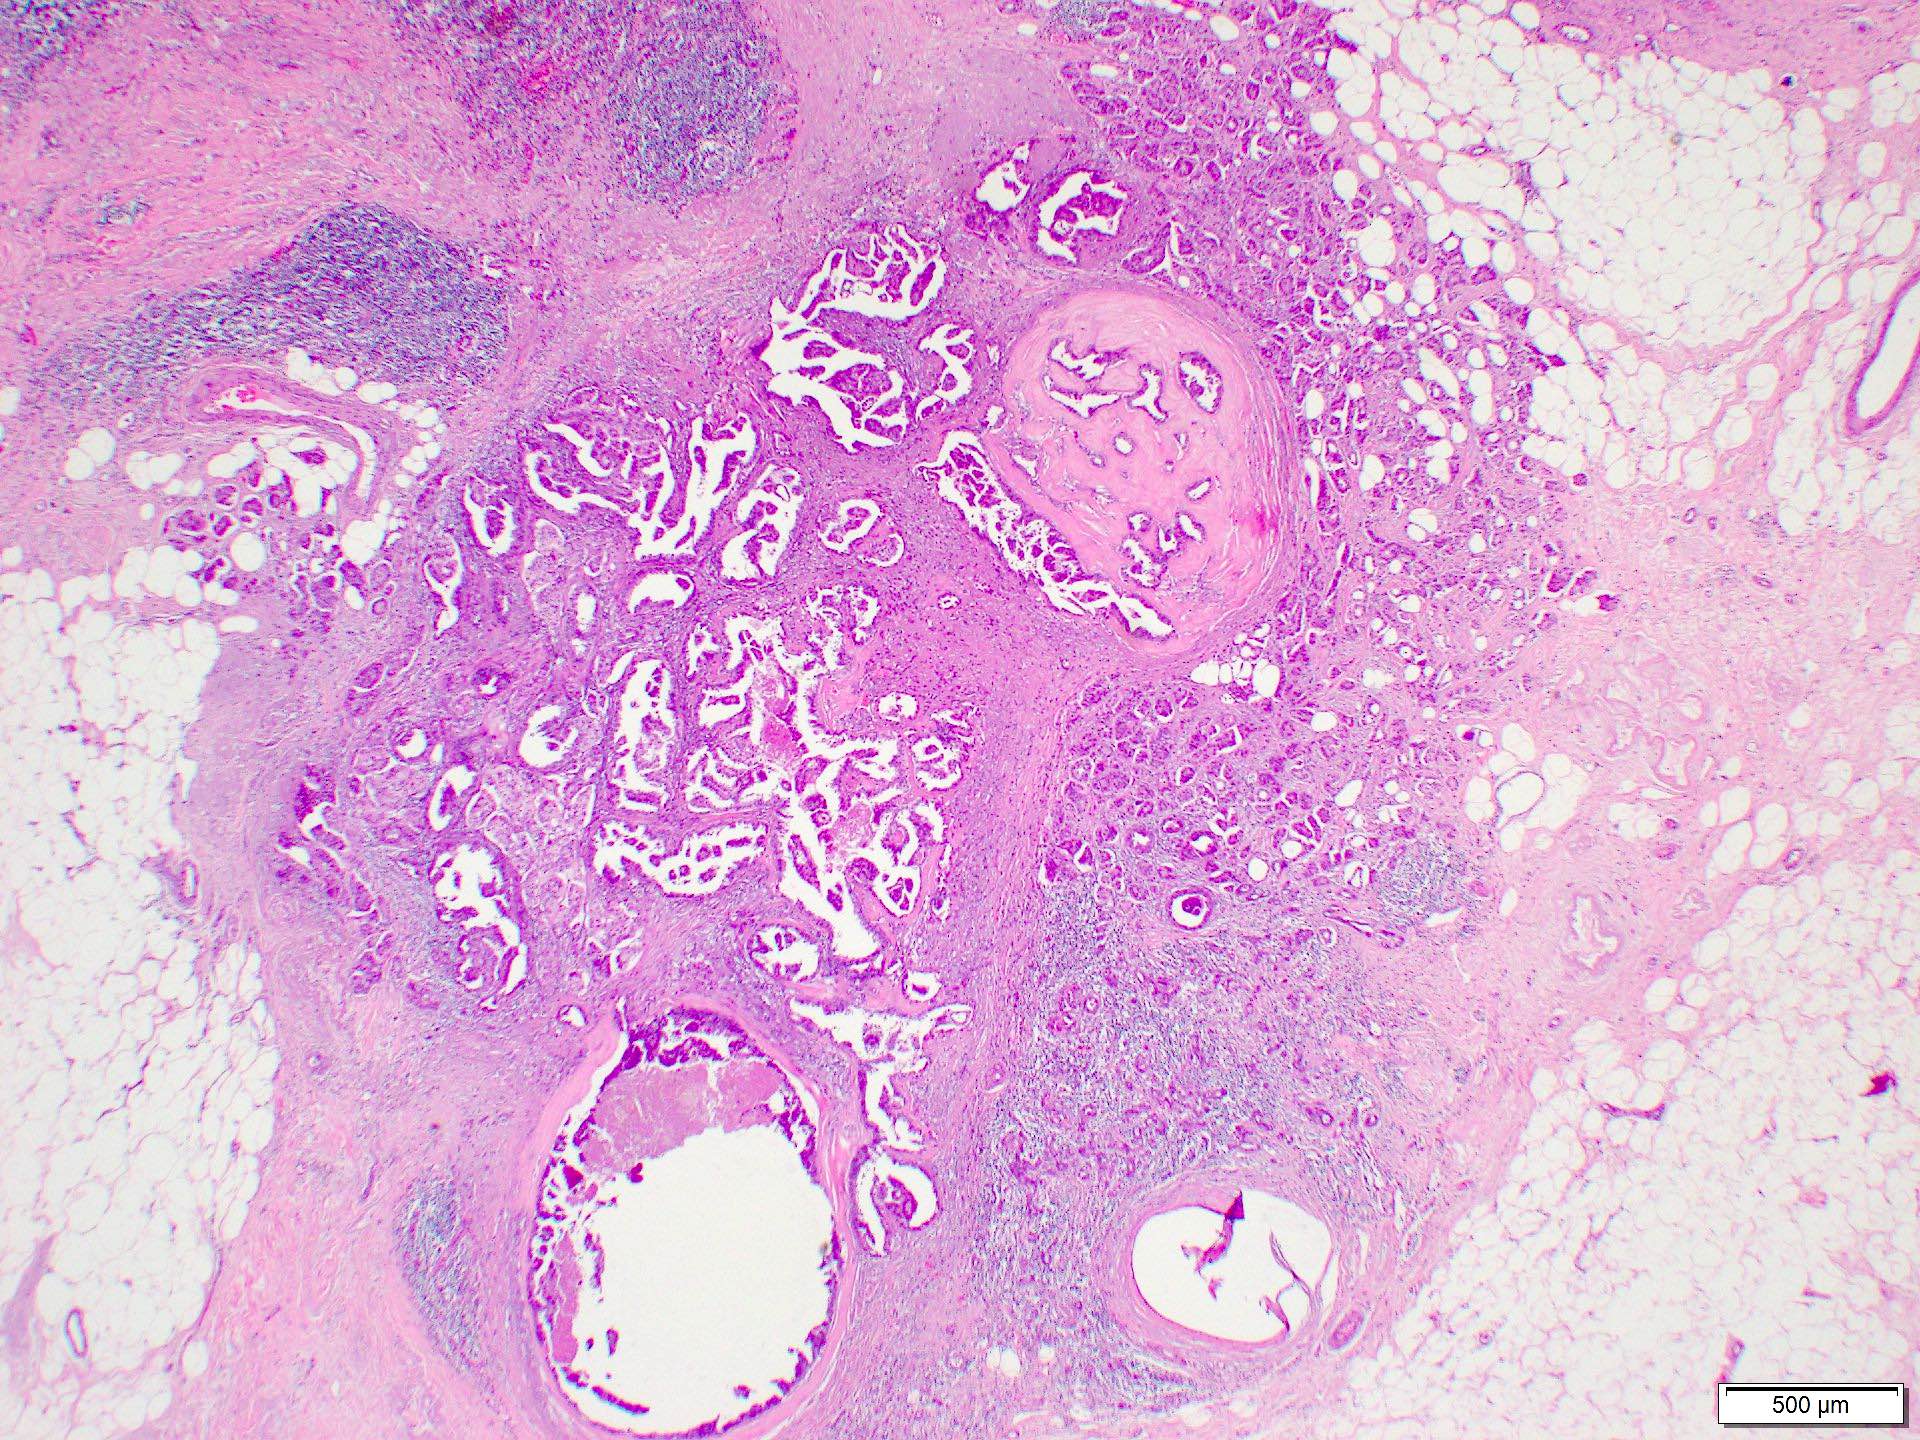 Invasive mixed papillary and micropapillary carcinoma